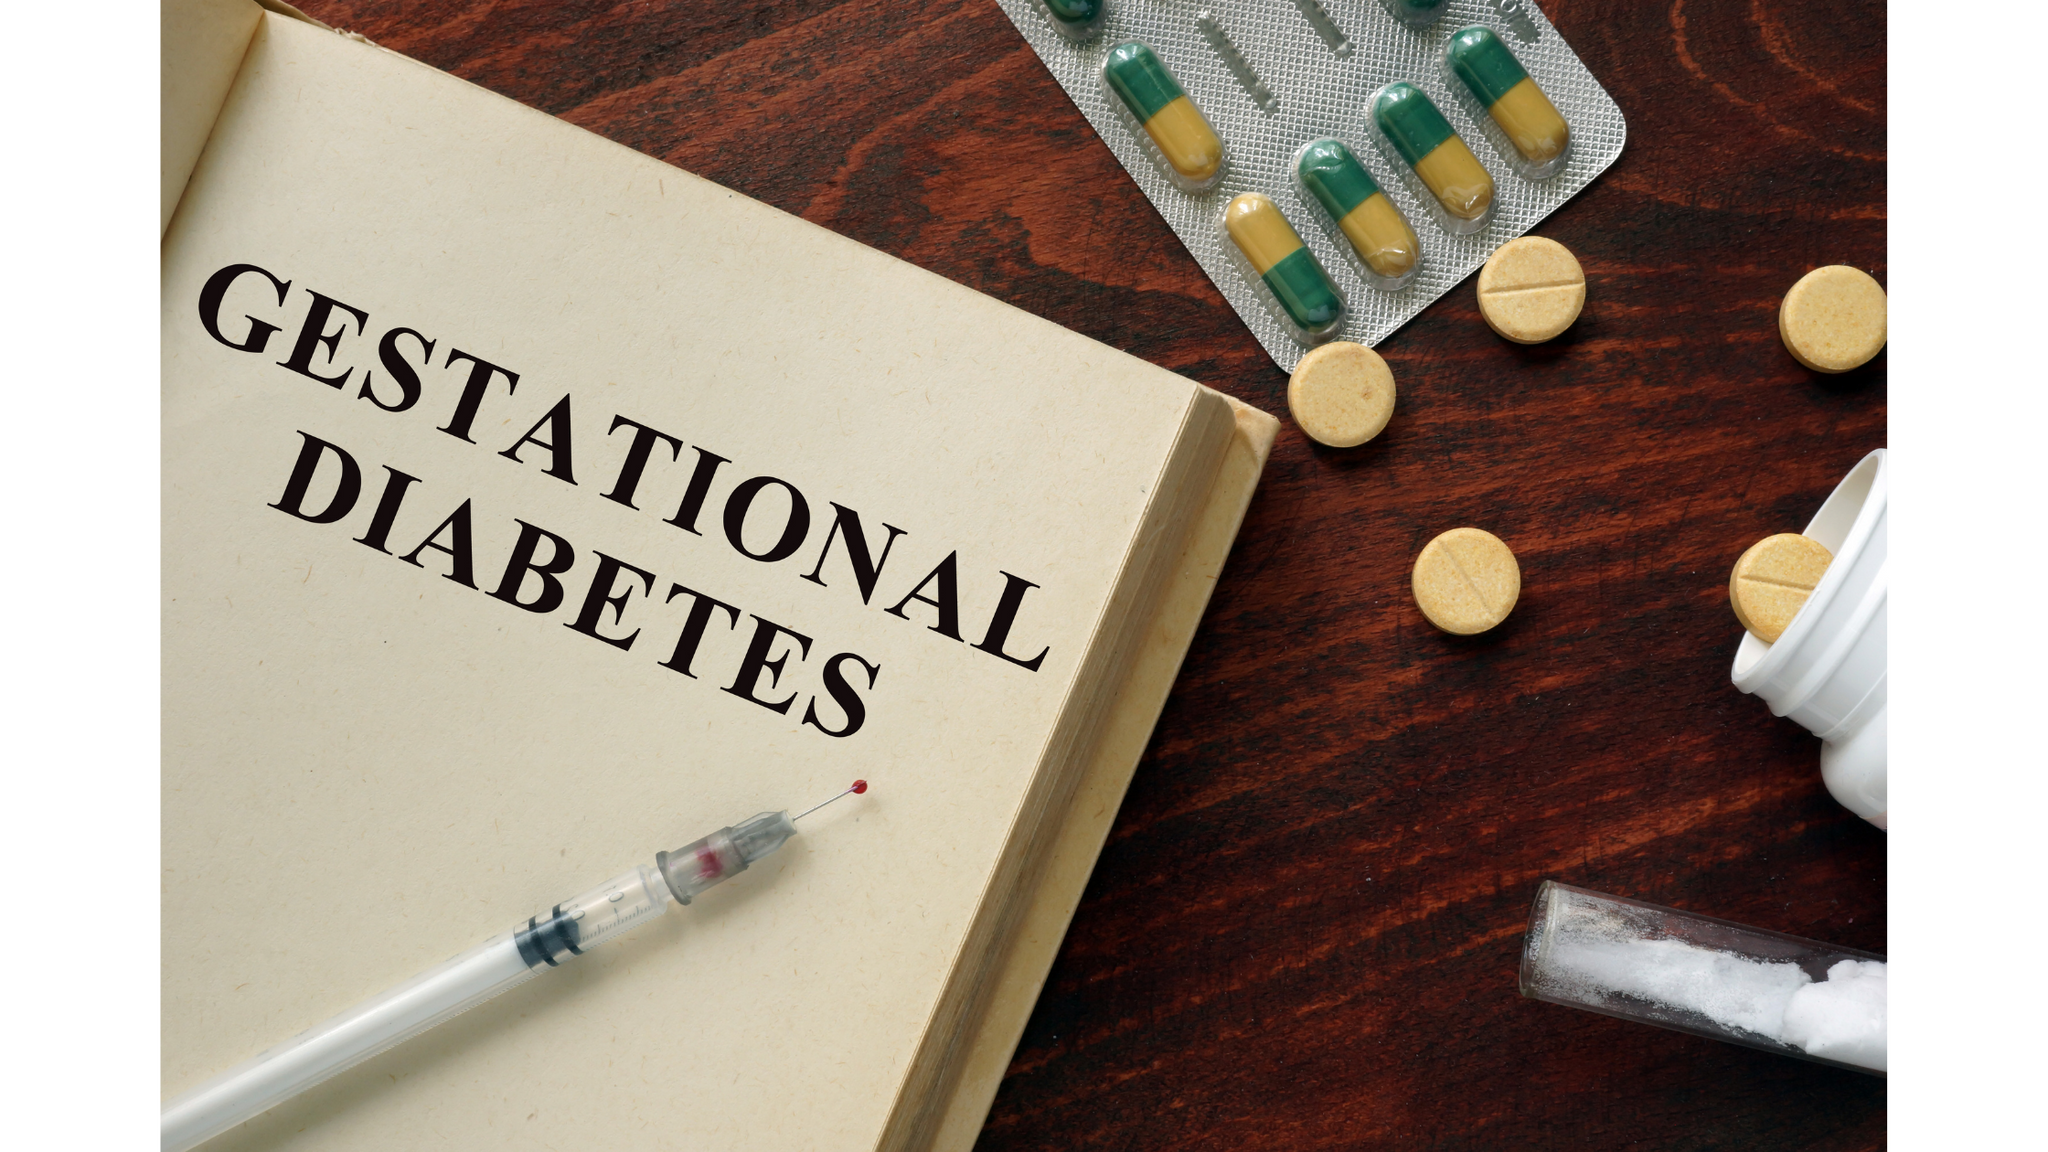 Gestational diabetes mellitus | Counterweight